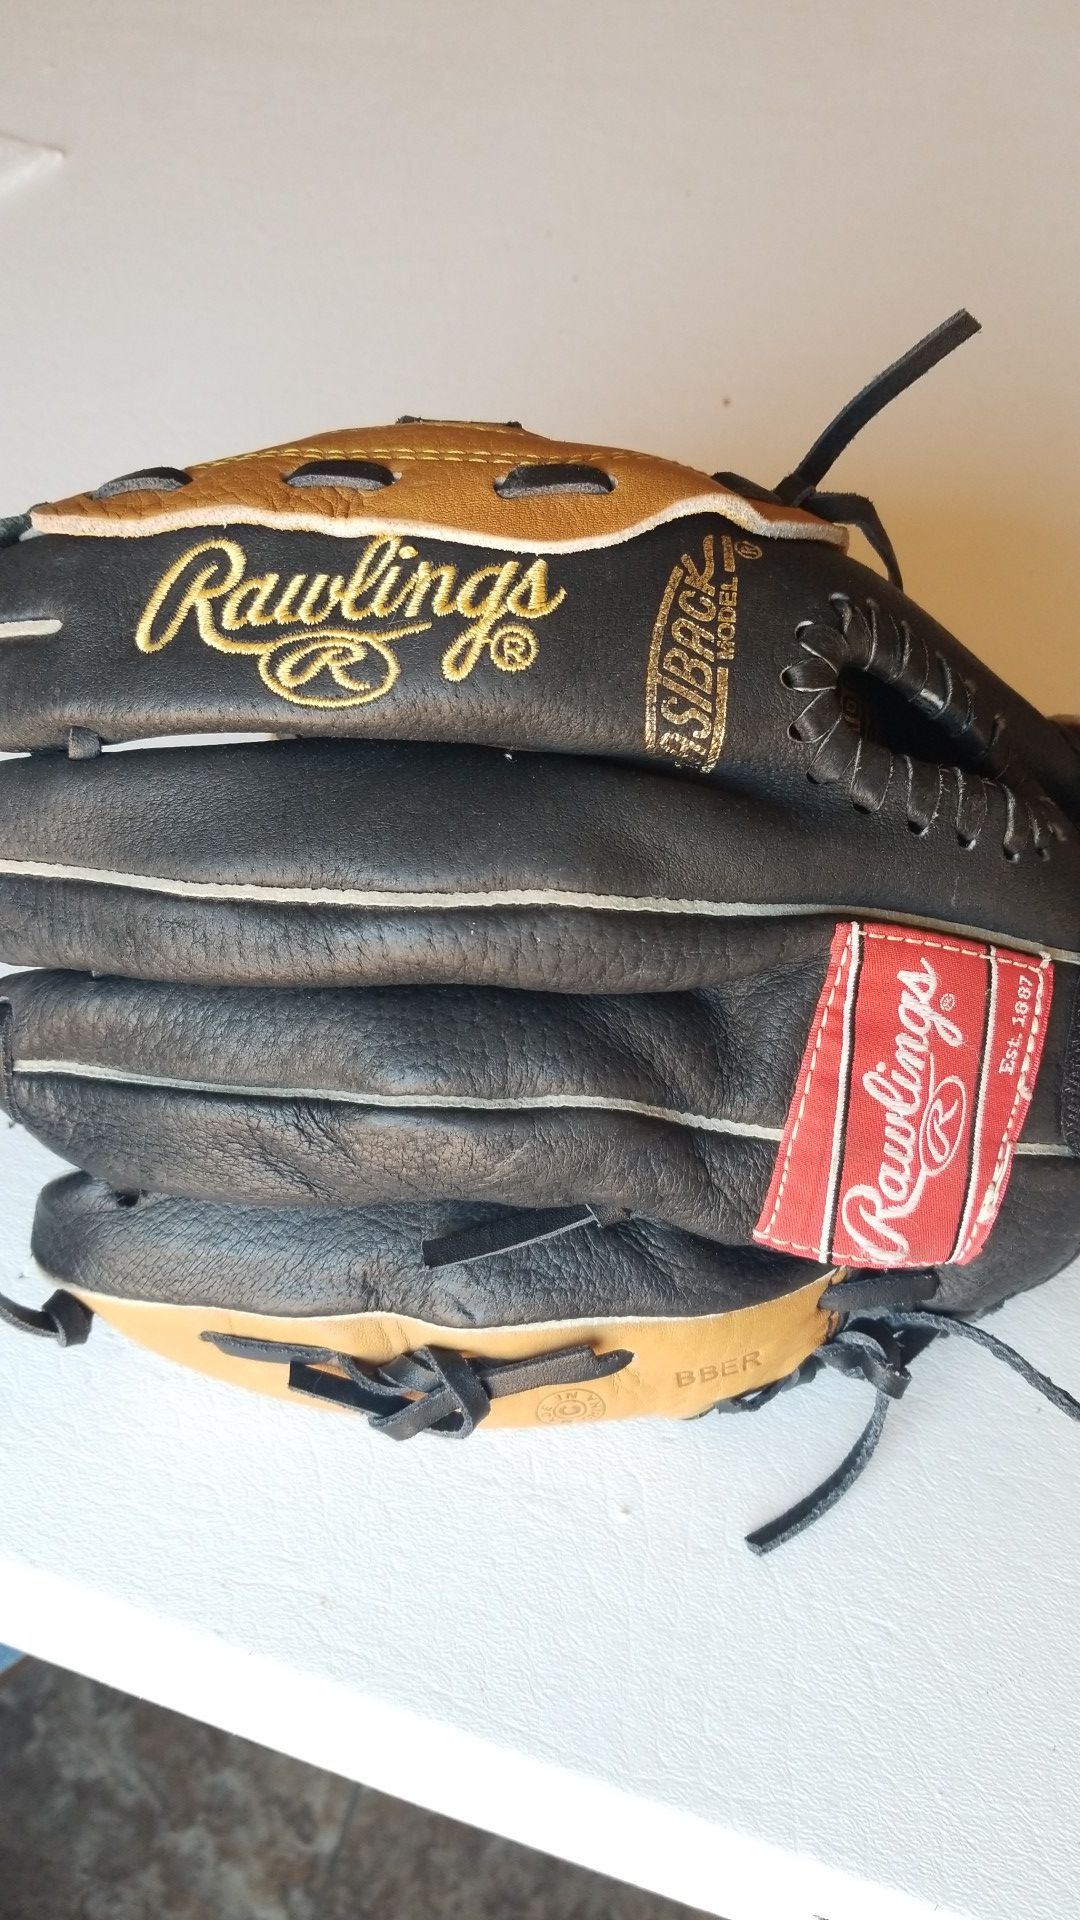 Rawlings youth baseball or softball glove